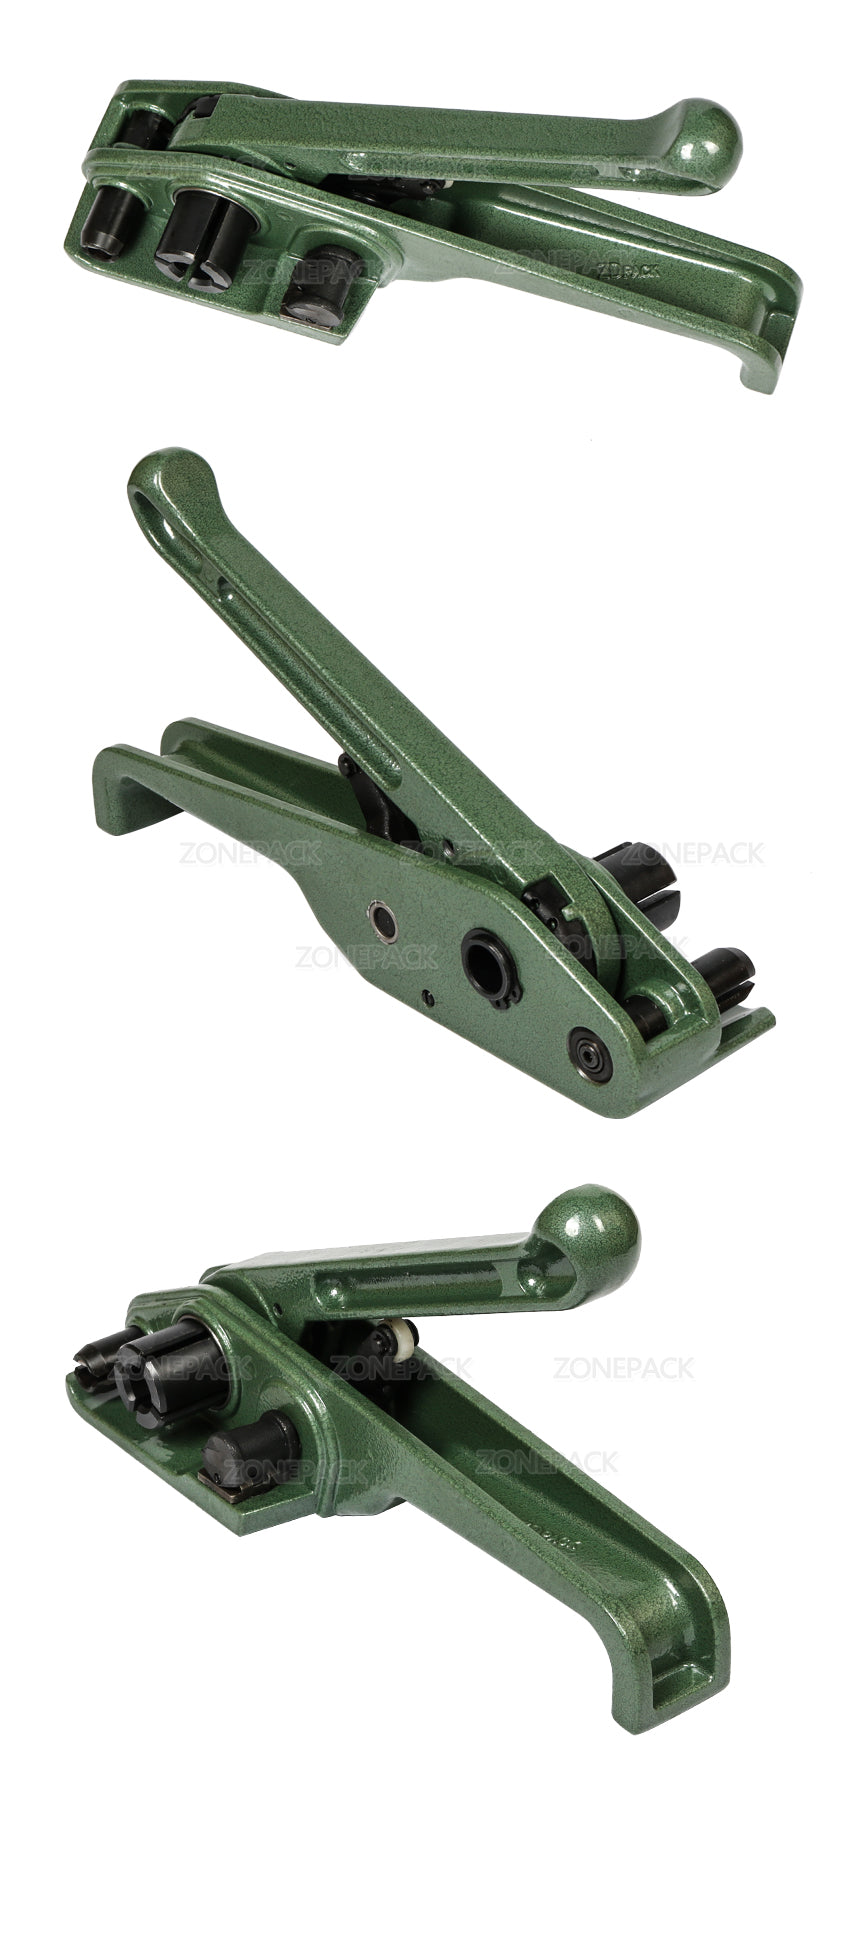 ZONEPACK Green Heavy Duty Tensioner Cutter, Машина для обвязки шнура, Инструменты для упаковки ПЭТ и ПП, Размер ленты: 3/8"- 3/4" Максимальное натяжение 2000N